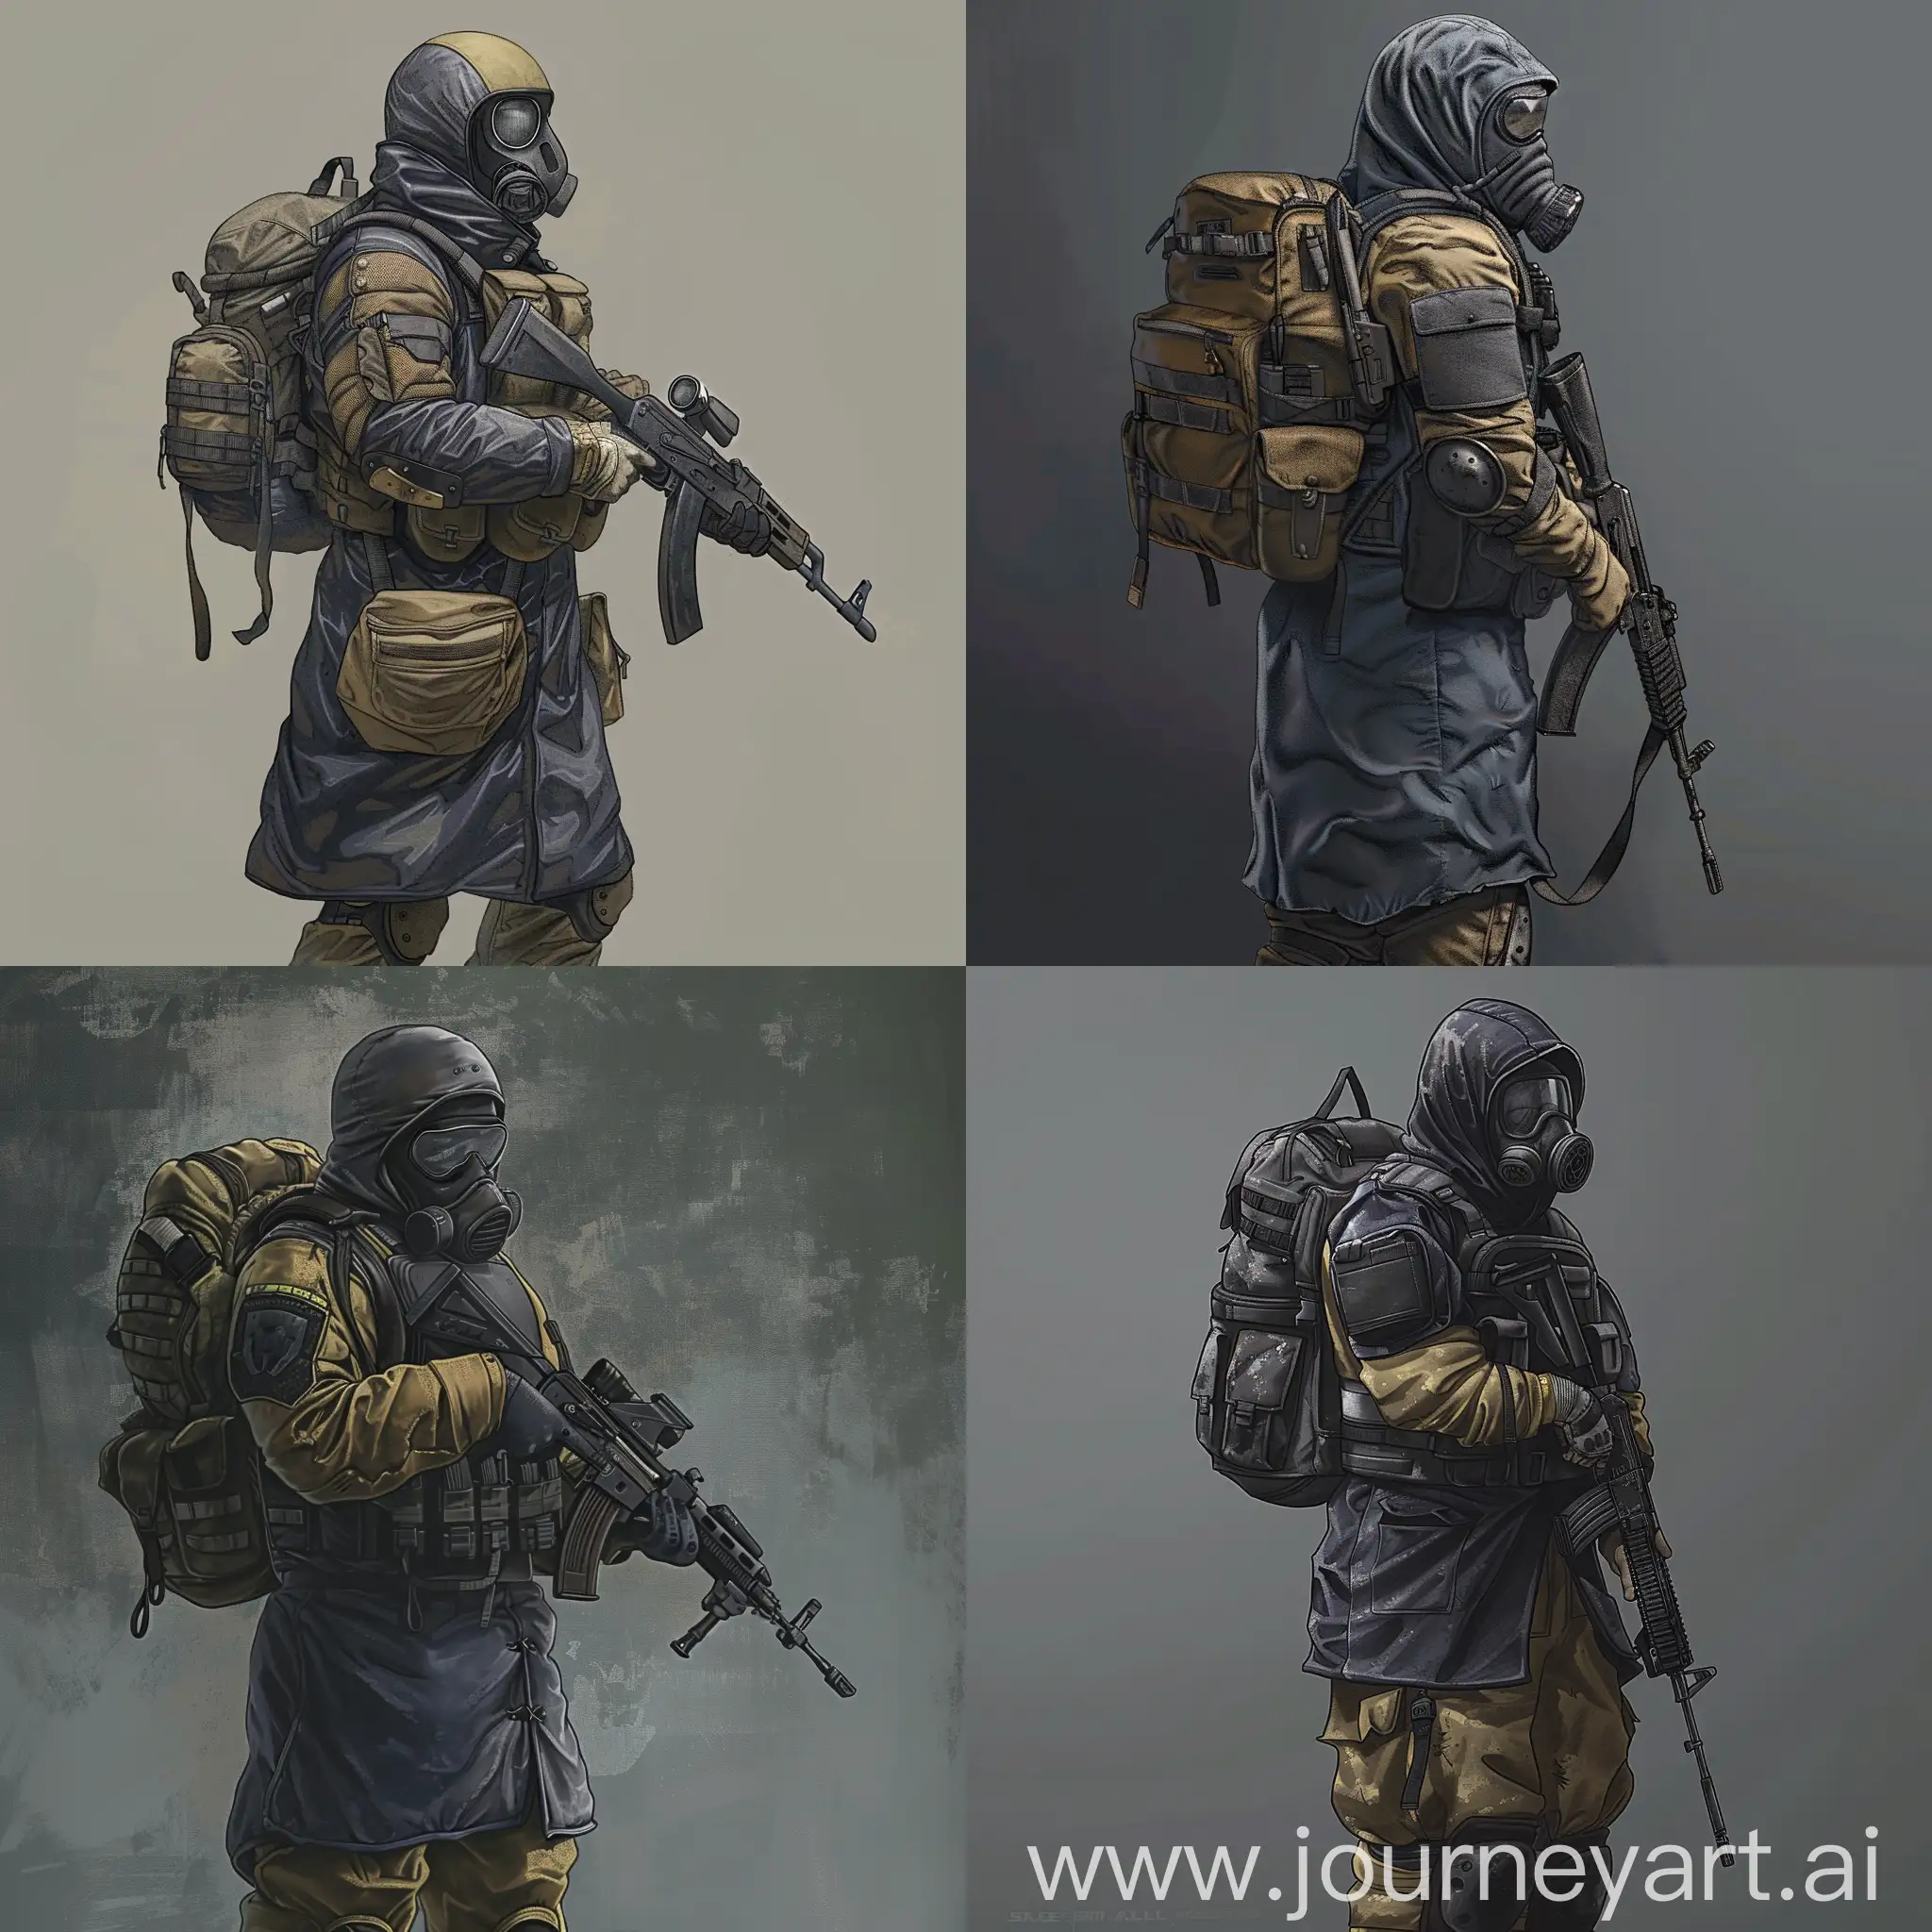 Mercenary-from-STALKER-Universe-in-Dark-Blue-Military-Raincoat